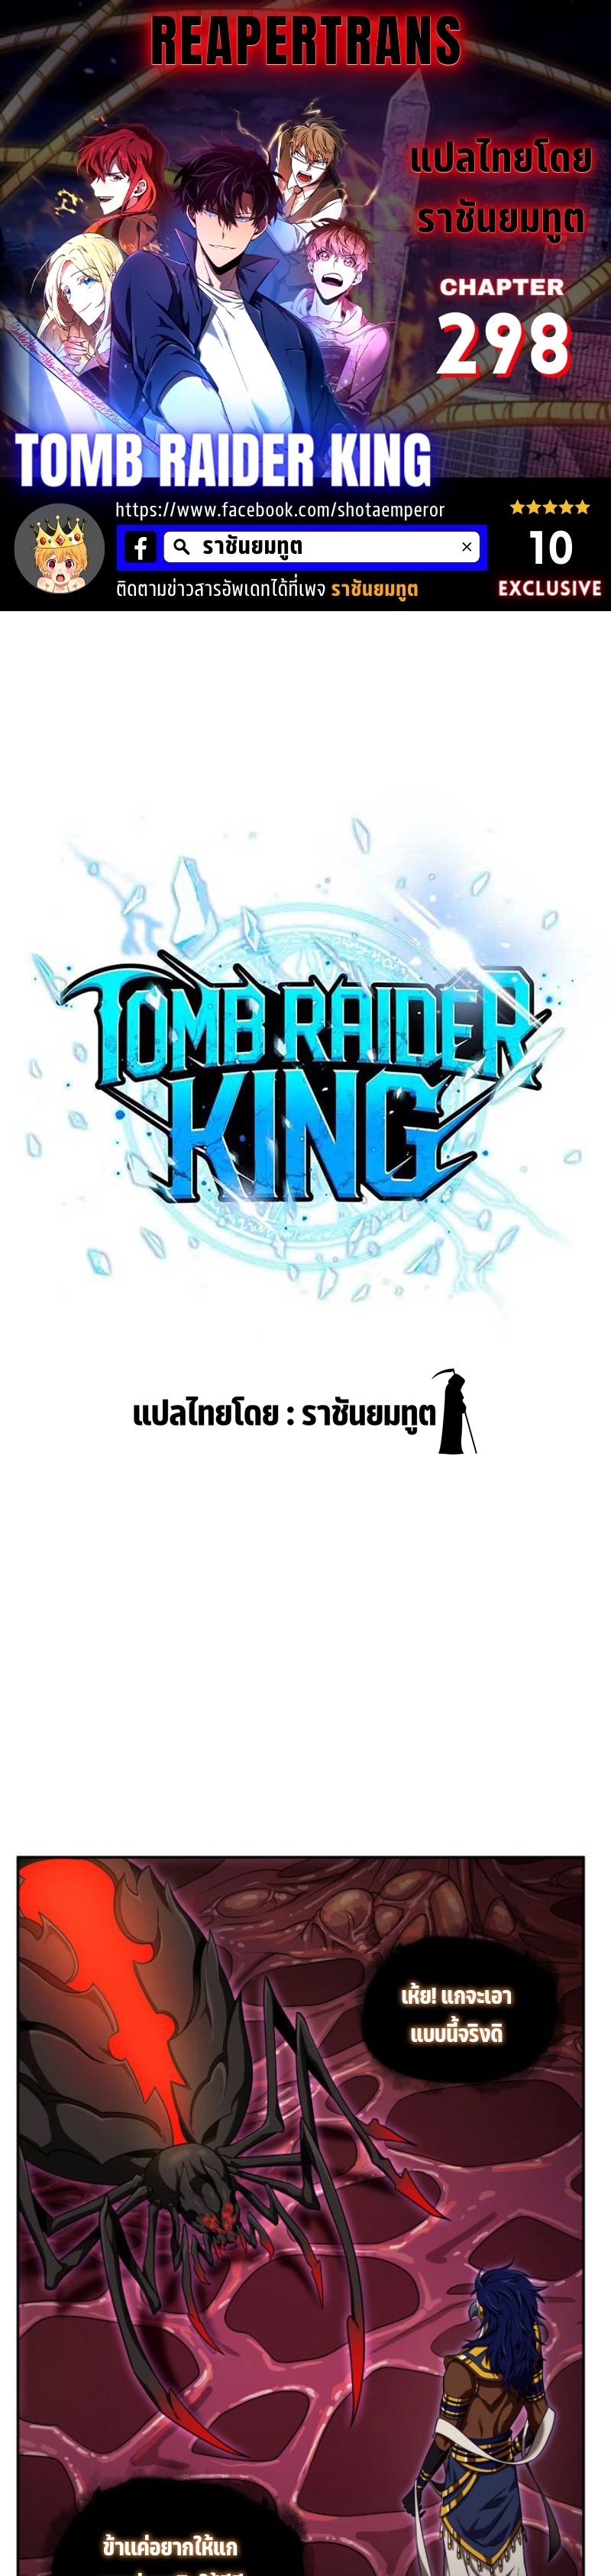 tomb raider king 298 (1)